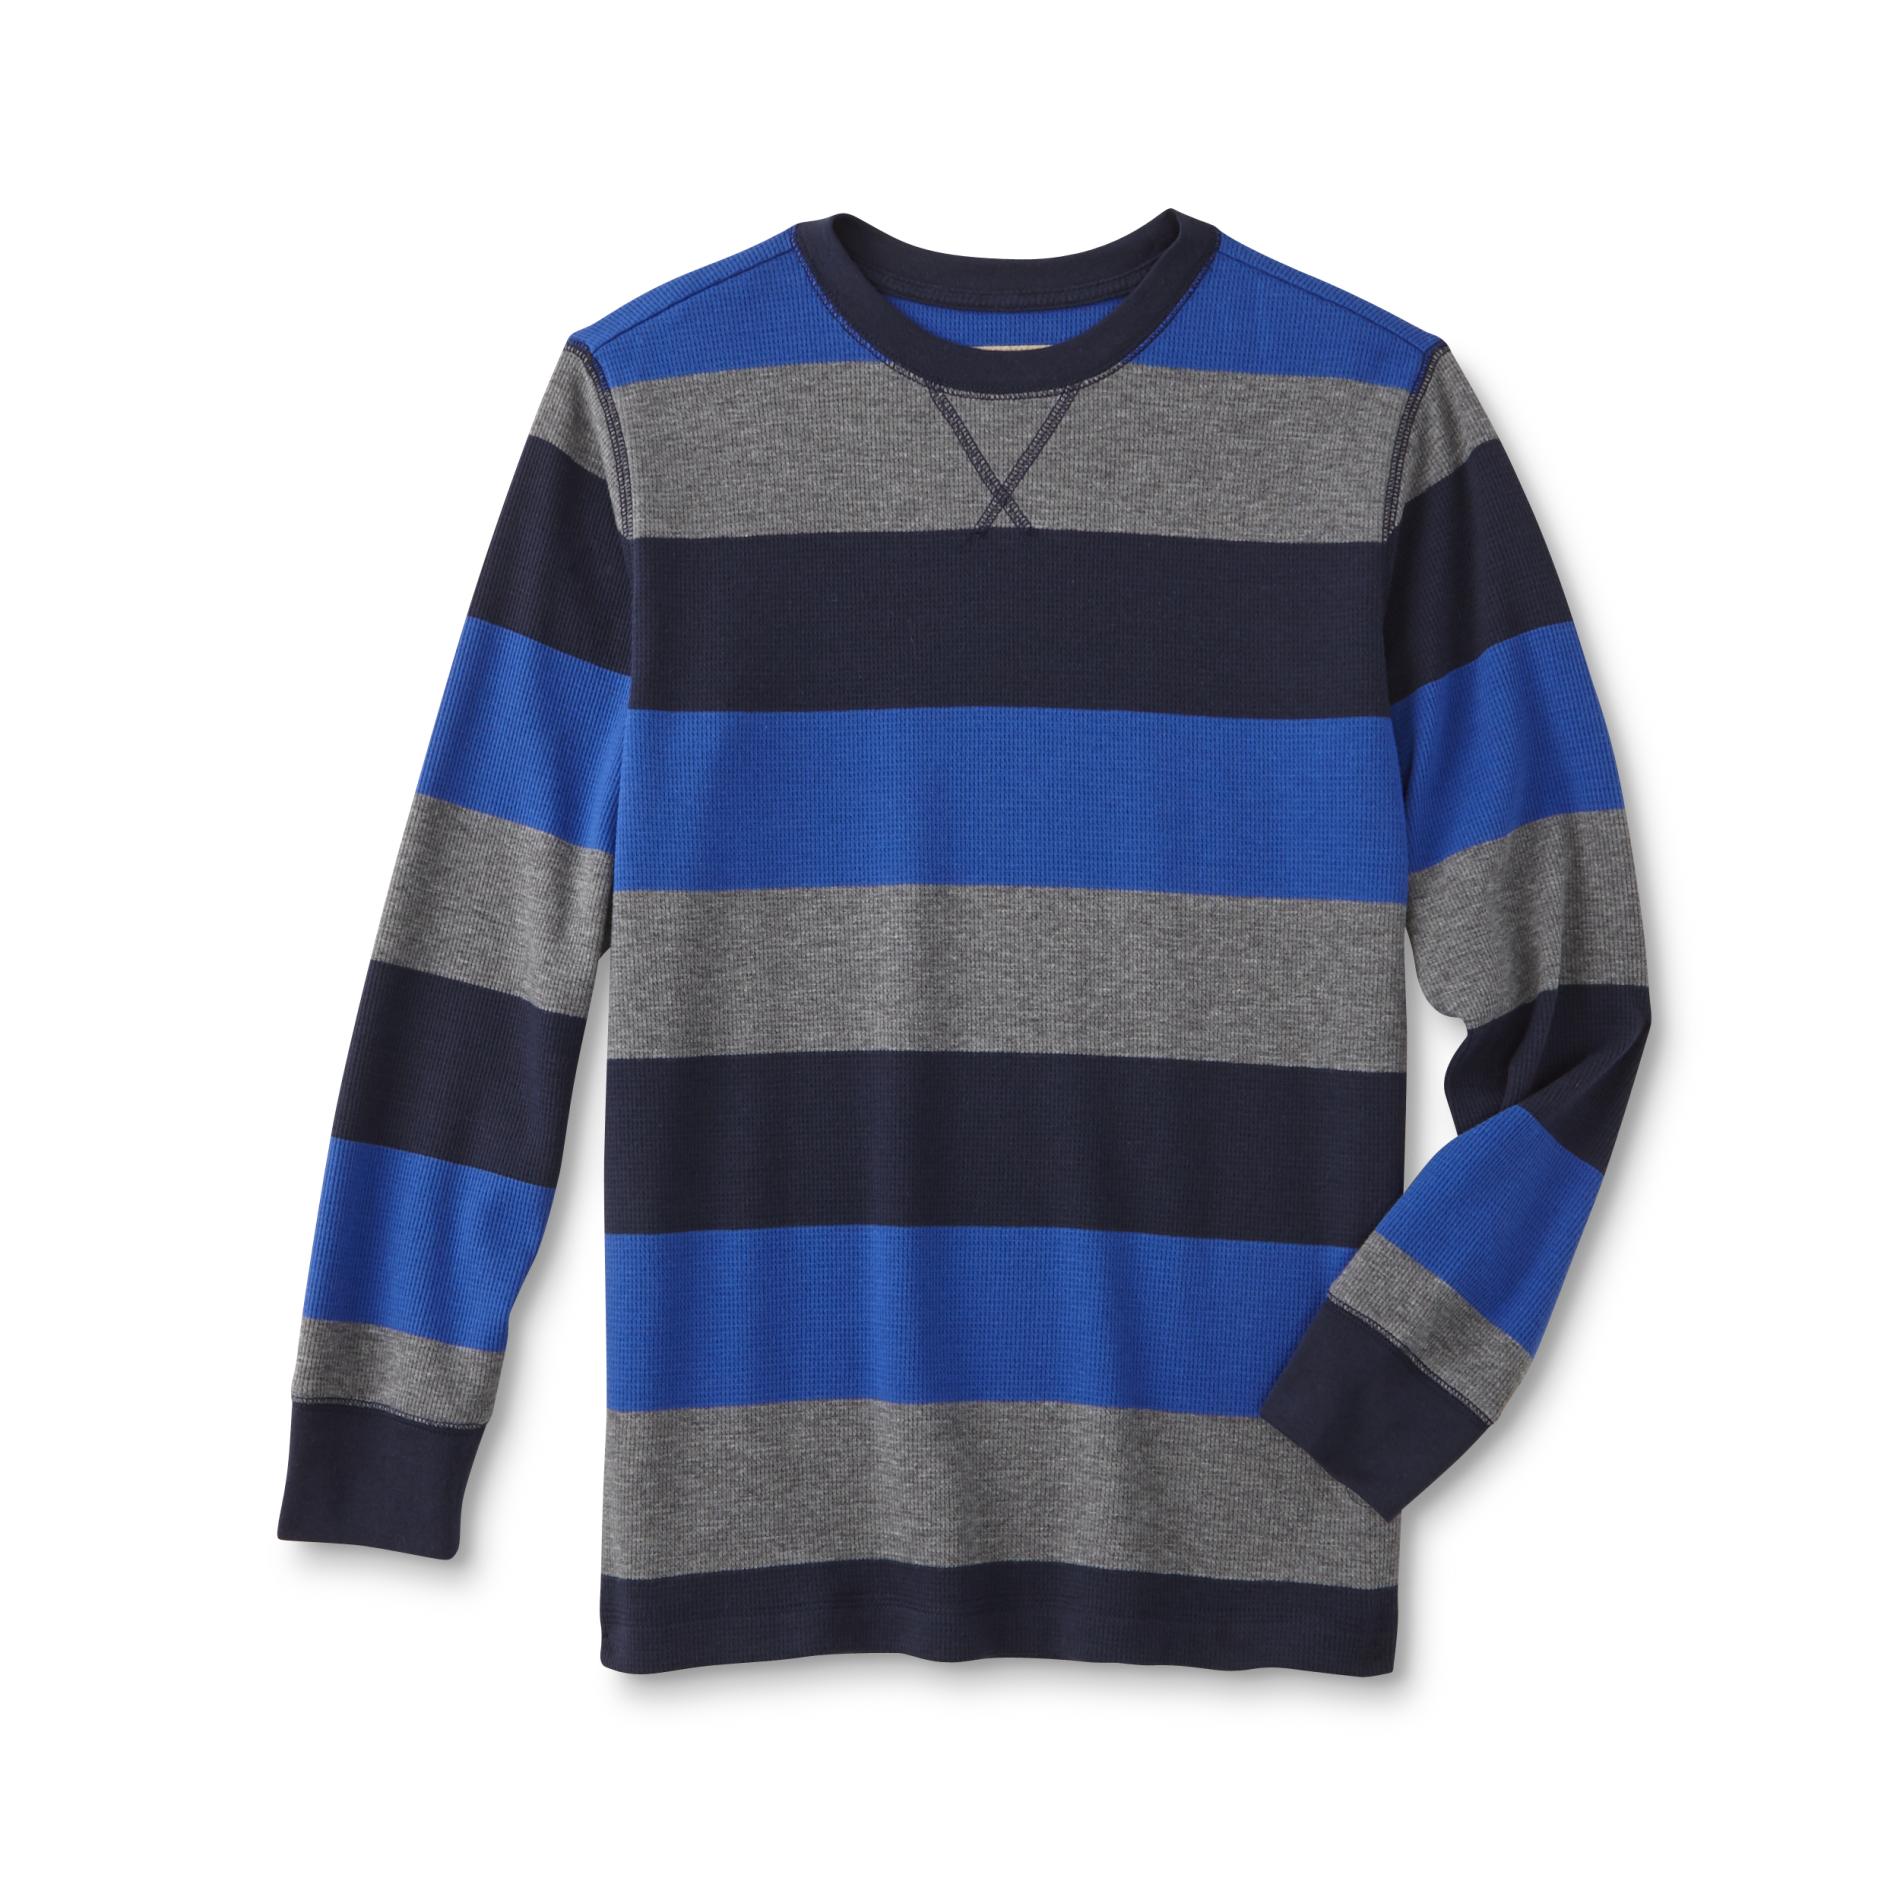 Roebuck & Co. Boys' Long-Sleeve Thermal Shirt - Striped